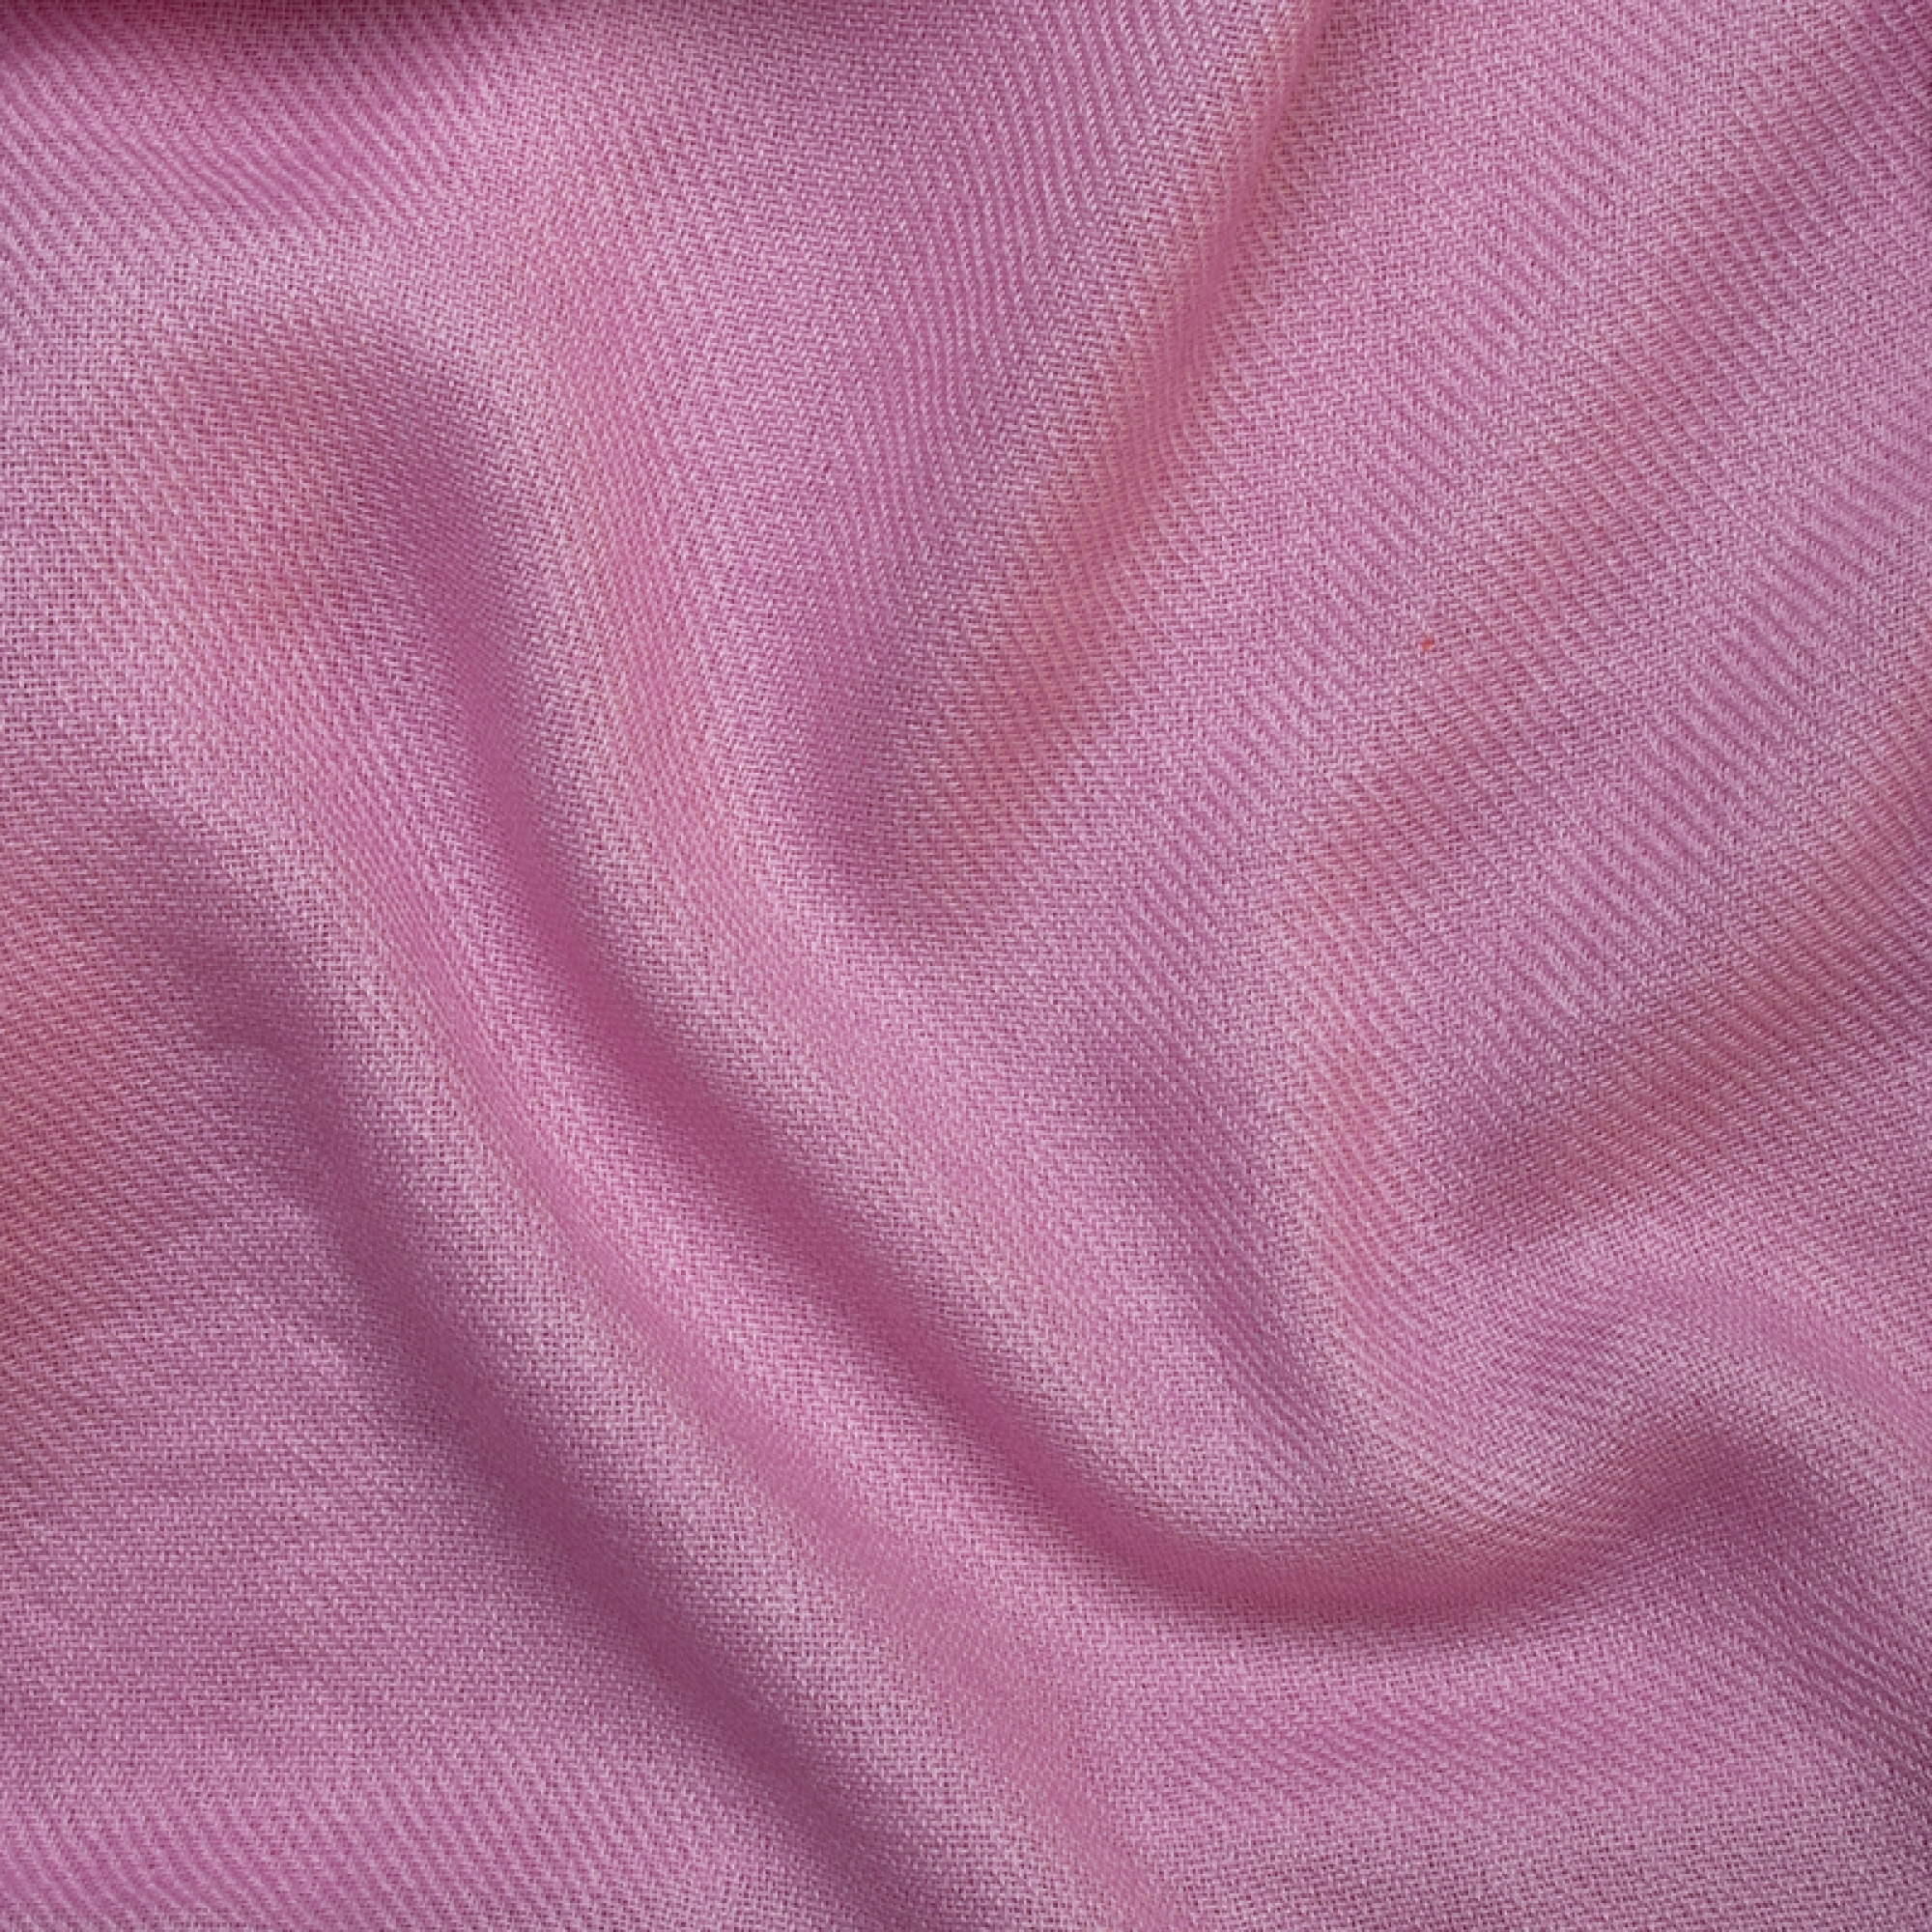 Cashmere accessories blanket toodoo plain s 140 x 200 pink lavender 140 x 200 cm